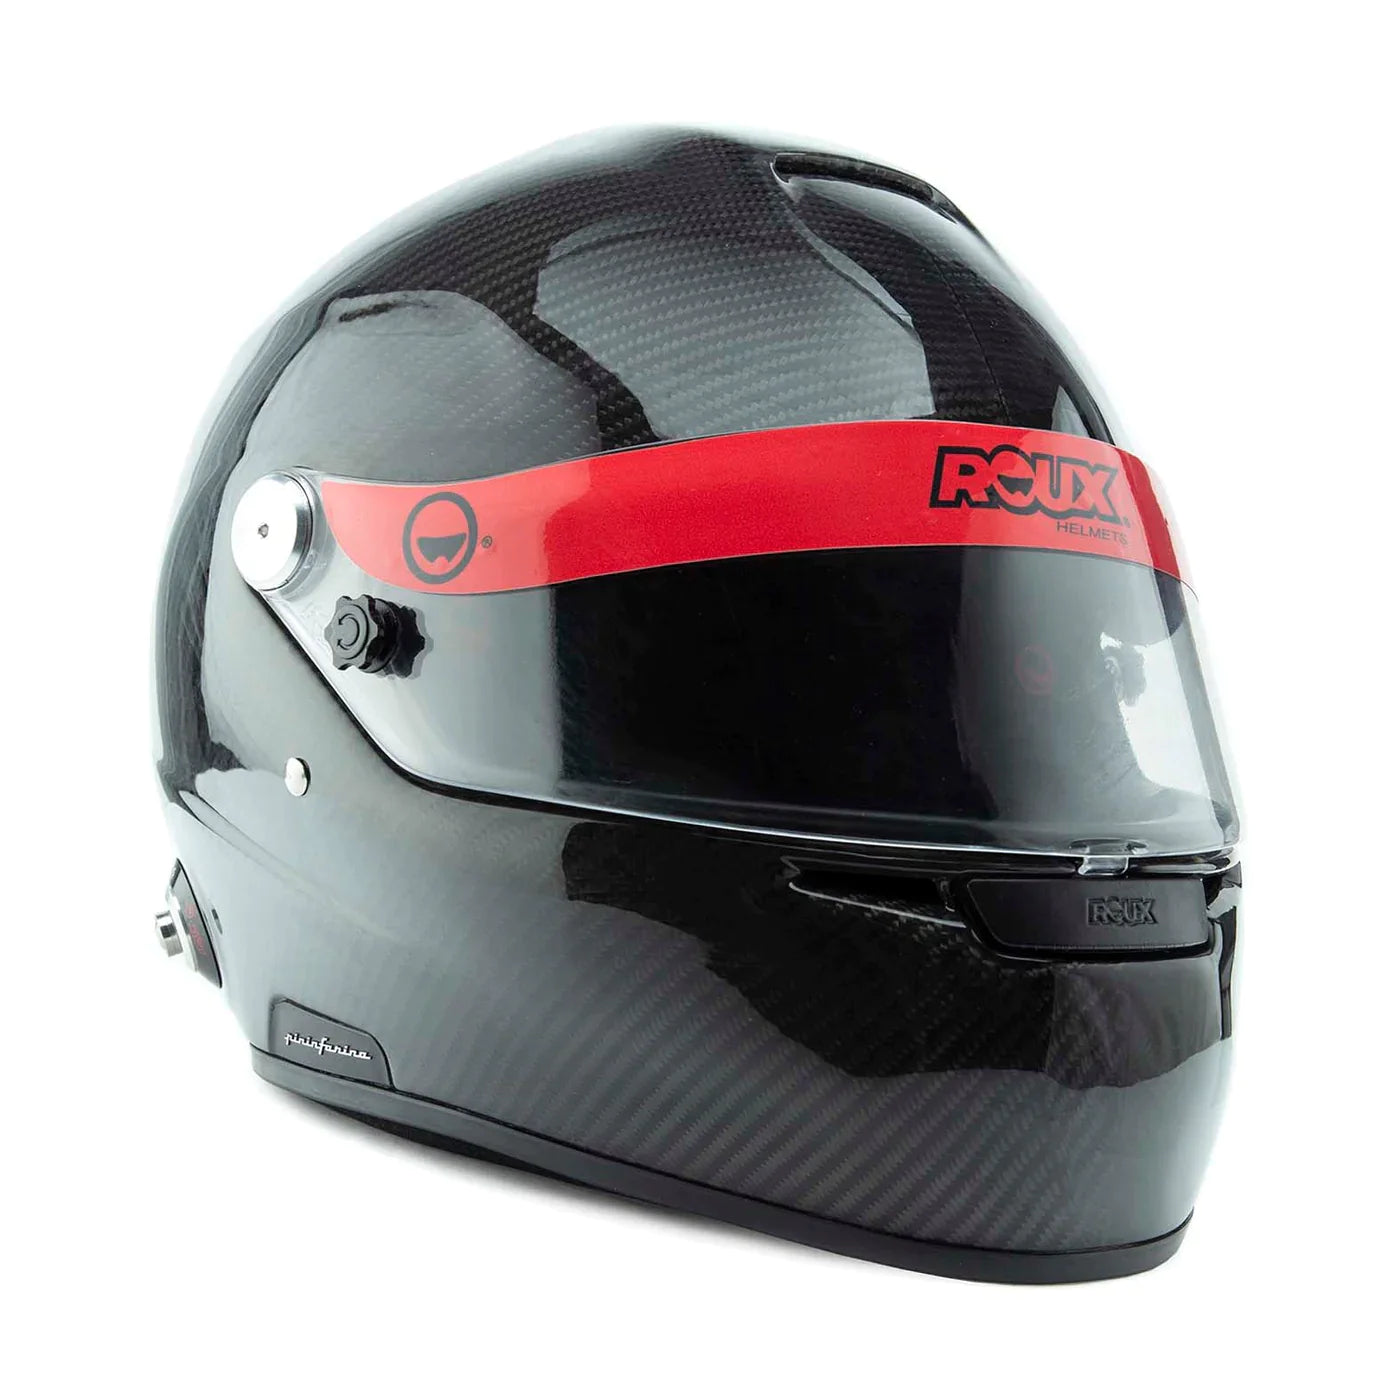 Roux Peninfarina Carbon Formula Sa2020 Helmet